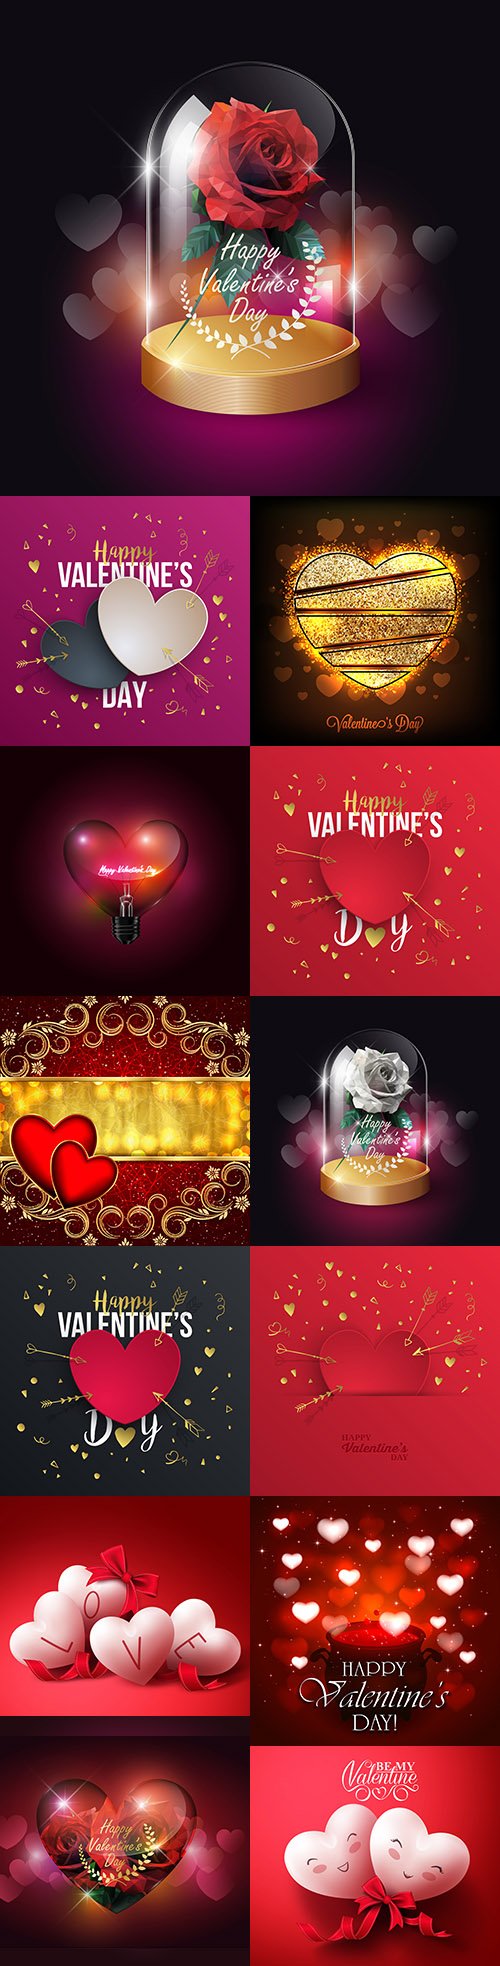 Happy Valentine's Day romantic decorative illustrations 28